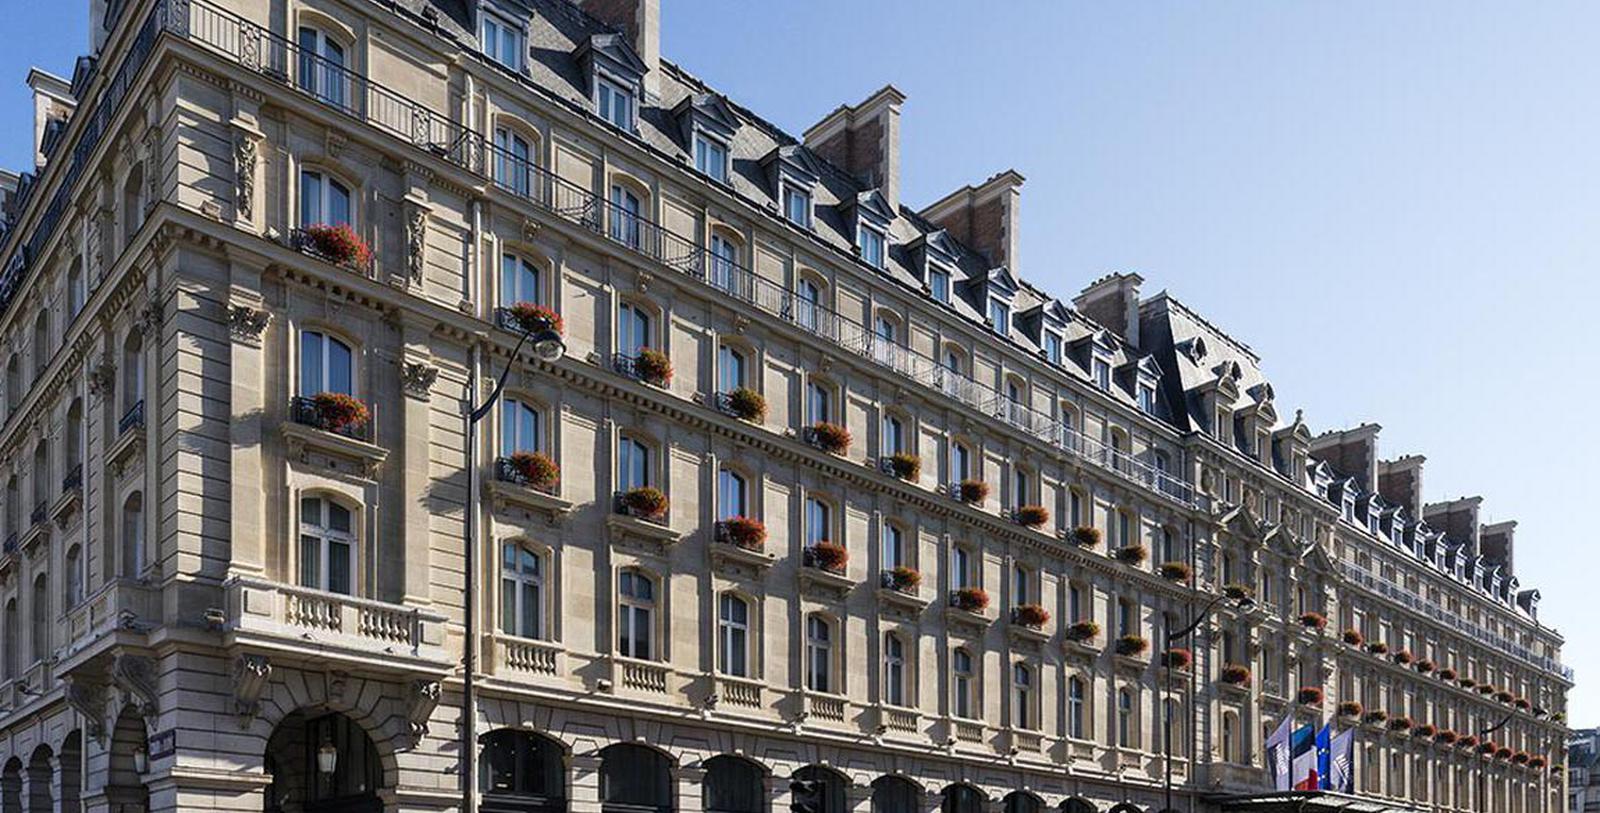 Image of Le Grand Salon, Hilton Paris Opera, France, 1889, Member of Historic Hotels Worldwide, Explore